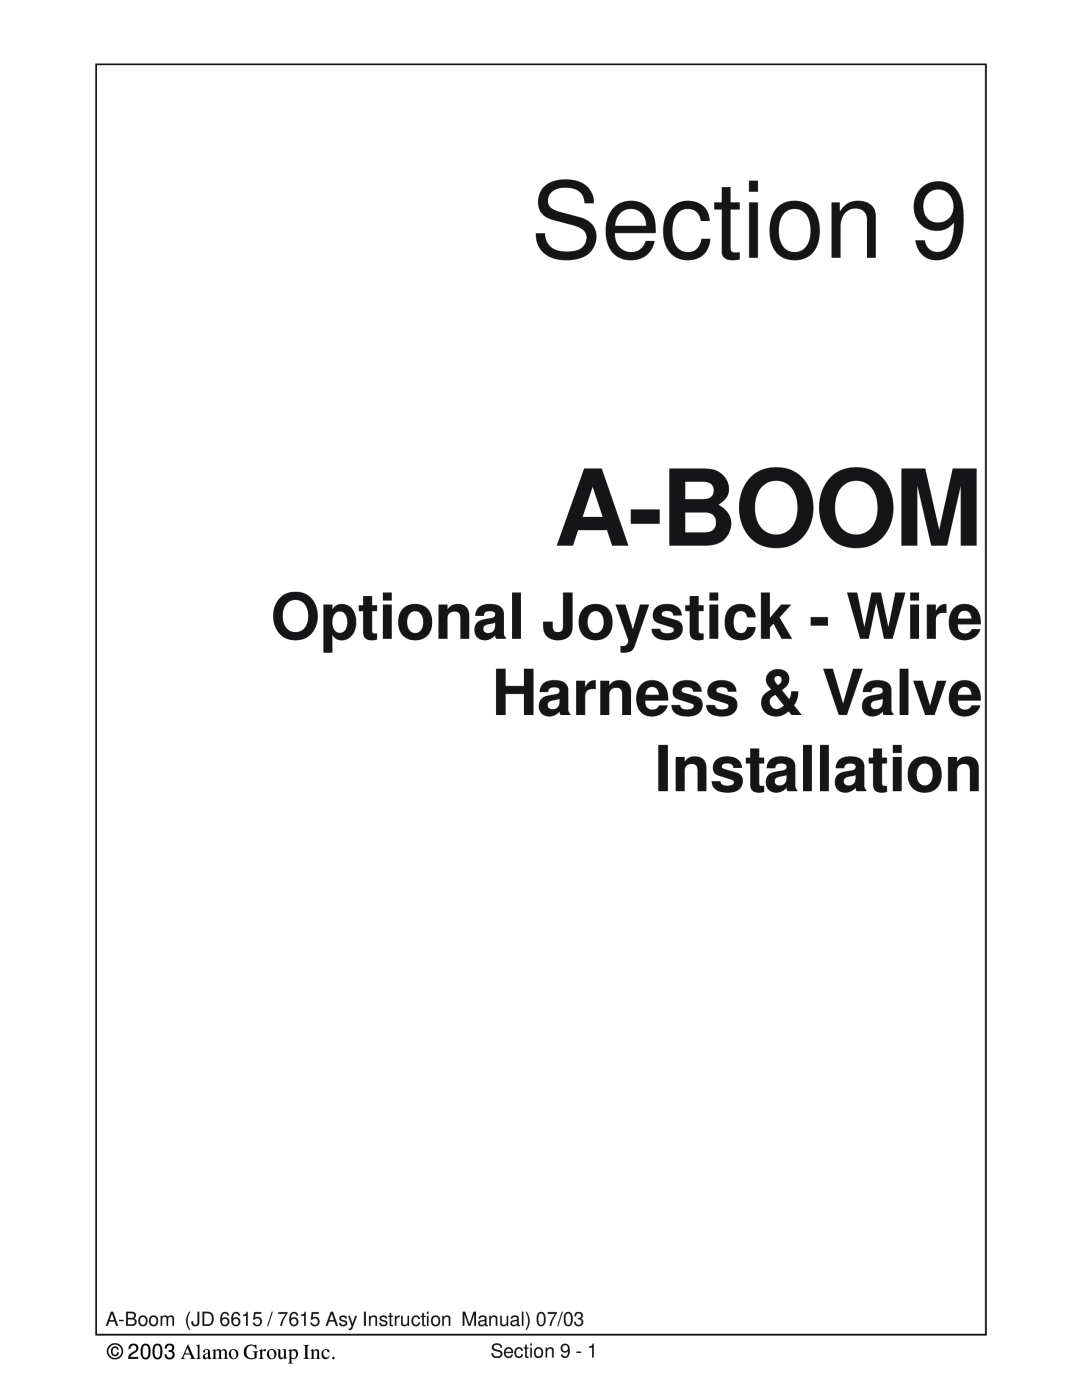 Alamo DSEB-D16/SAS Optional Joystick - Wire Harness & Valve Installation, Section, A-Boom, Alamo Group Inc 